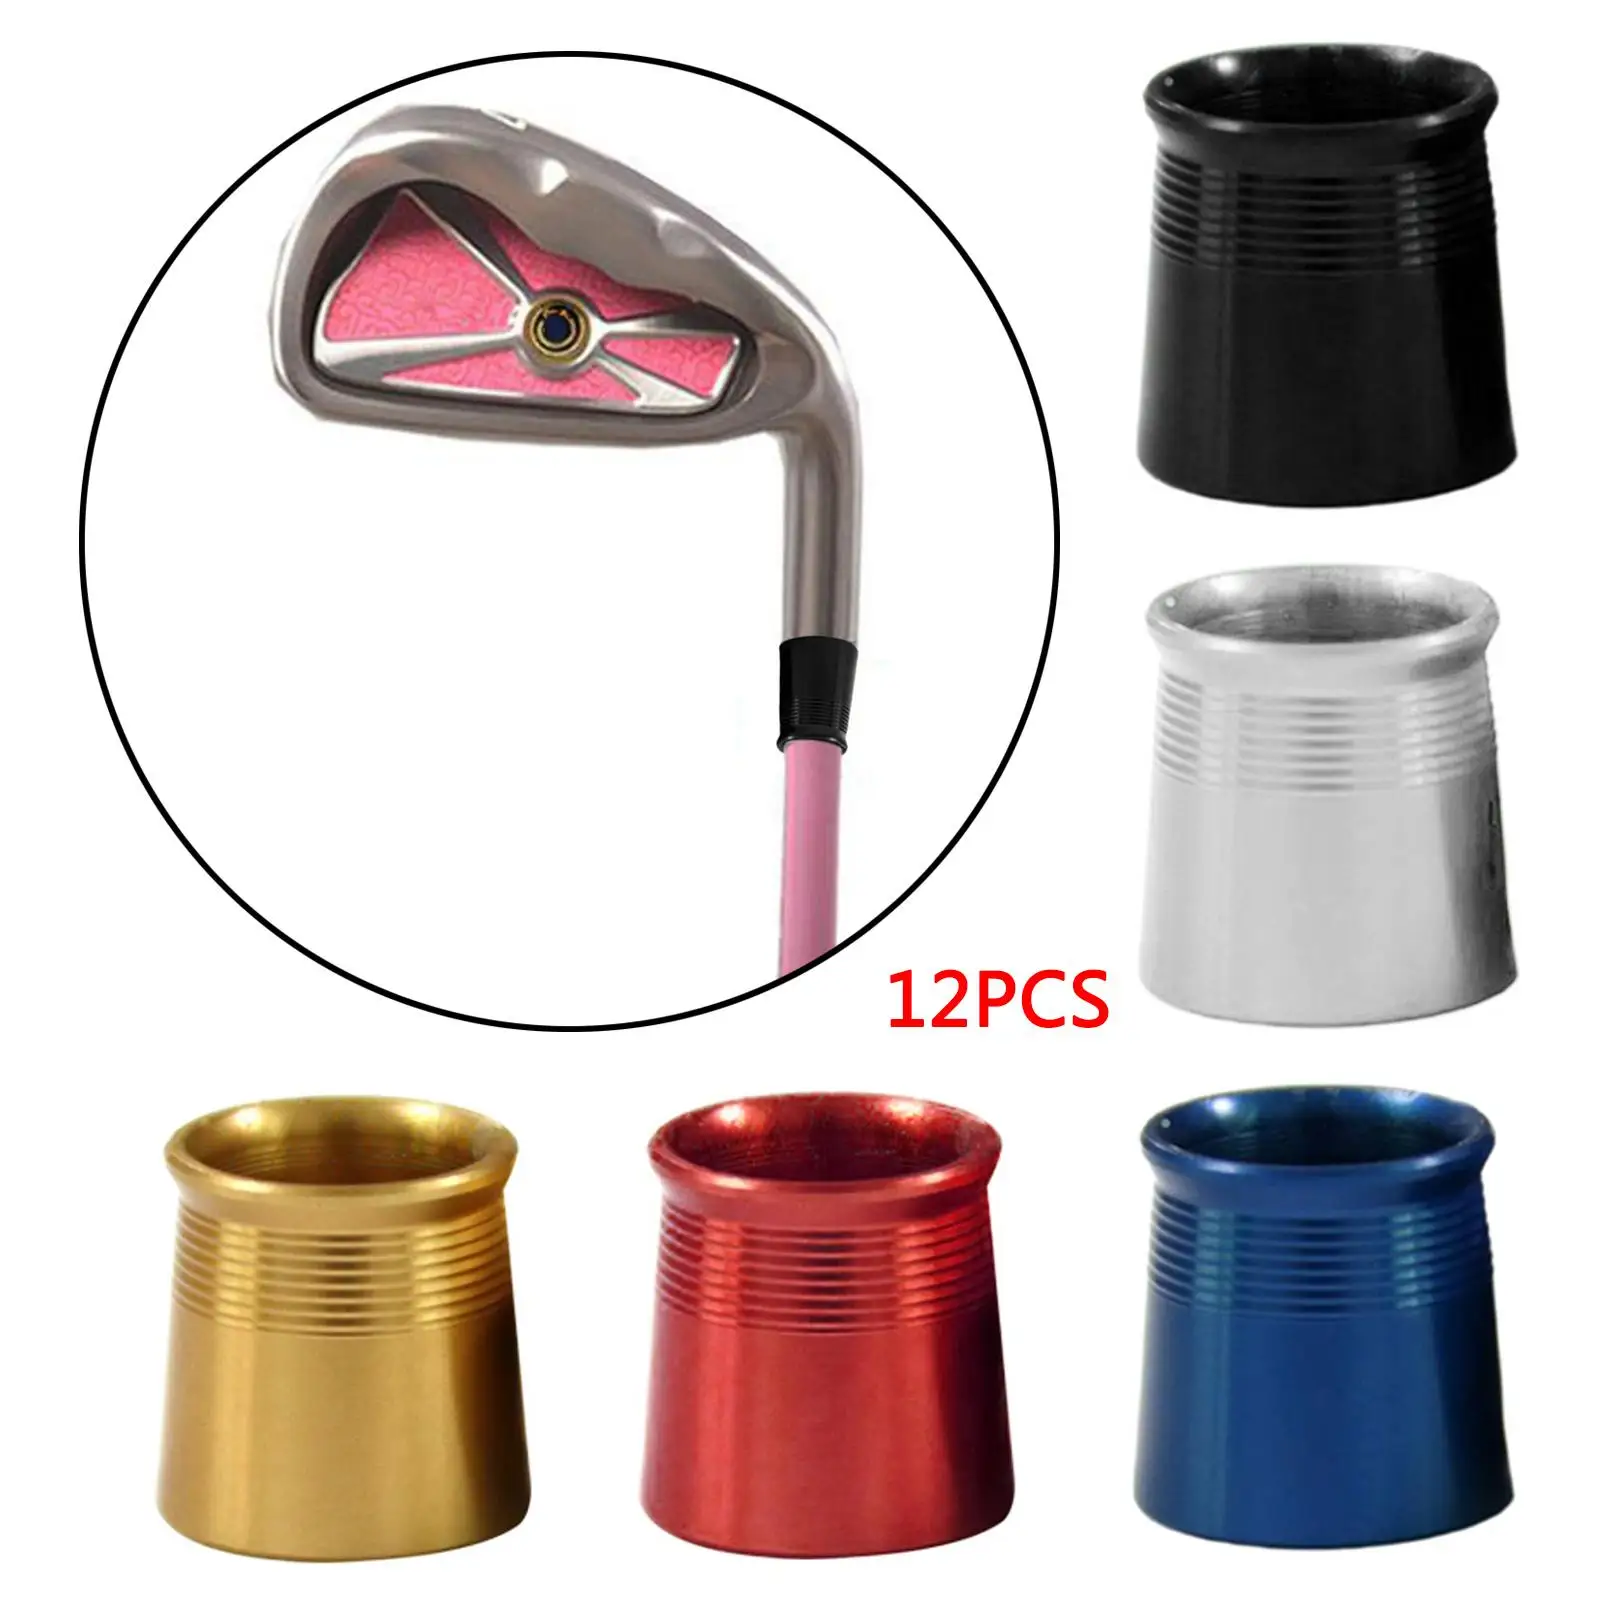 12pcs Aluminum Alloy Golf Ferrules Fit 0.370 Tips Irons Shaft Golf Shaft Sleeve Adapter Replacement